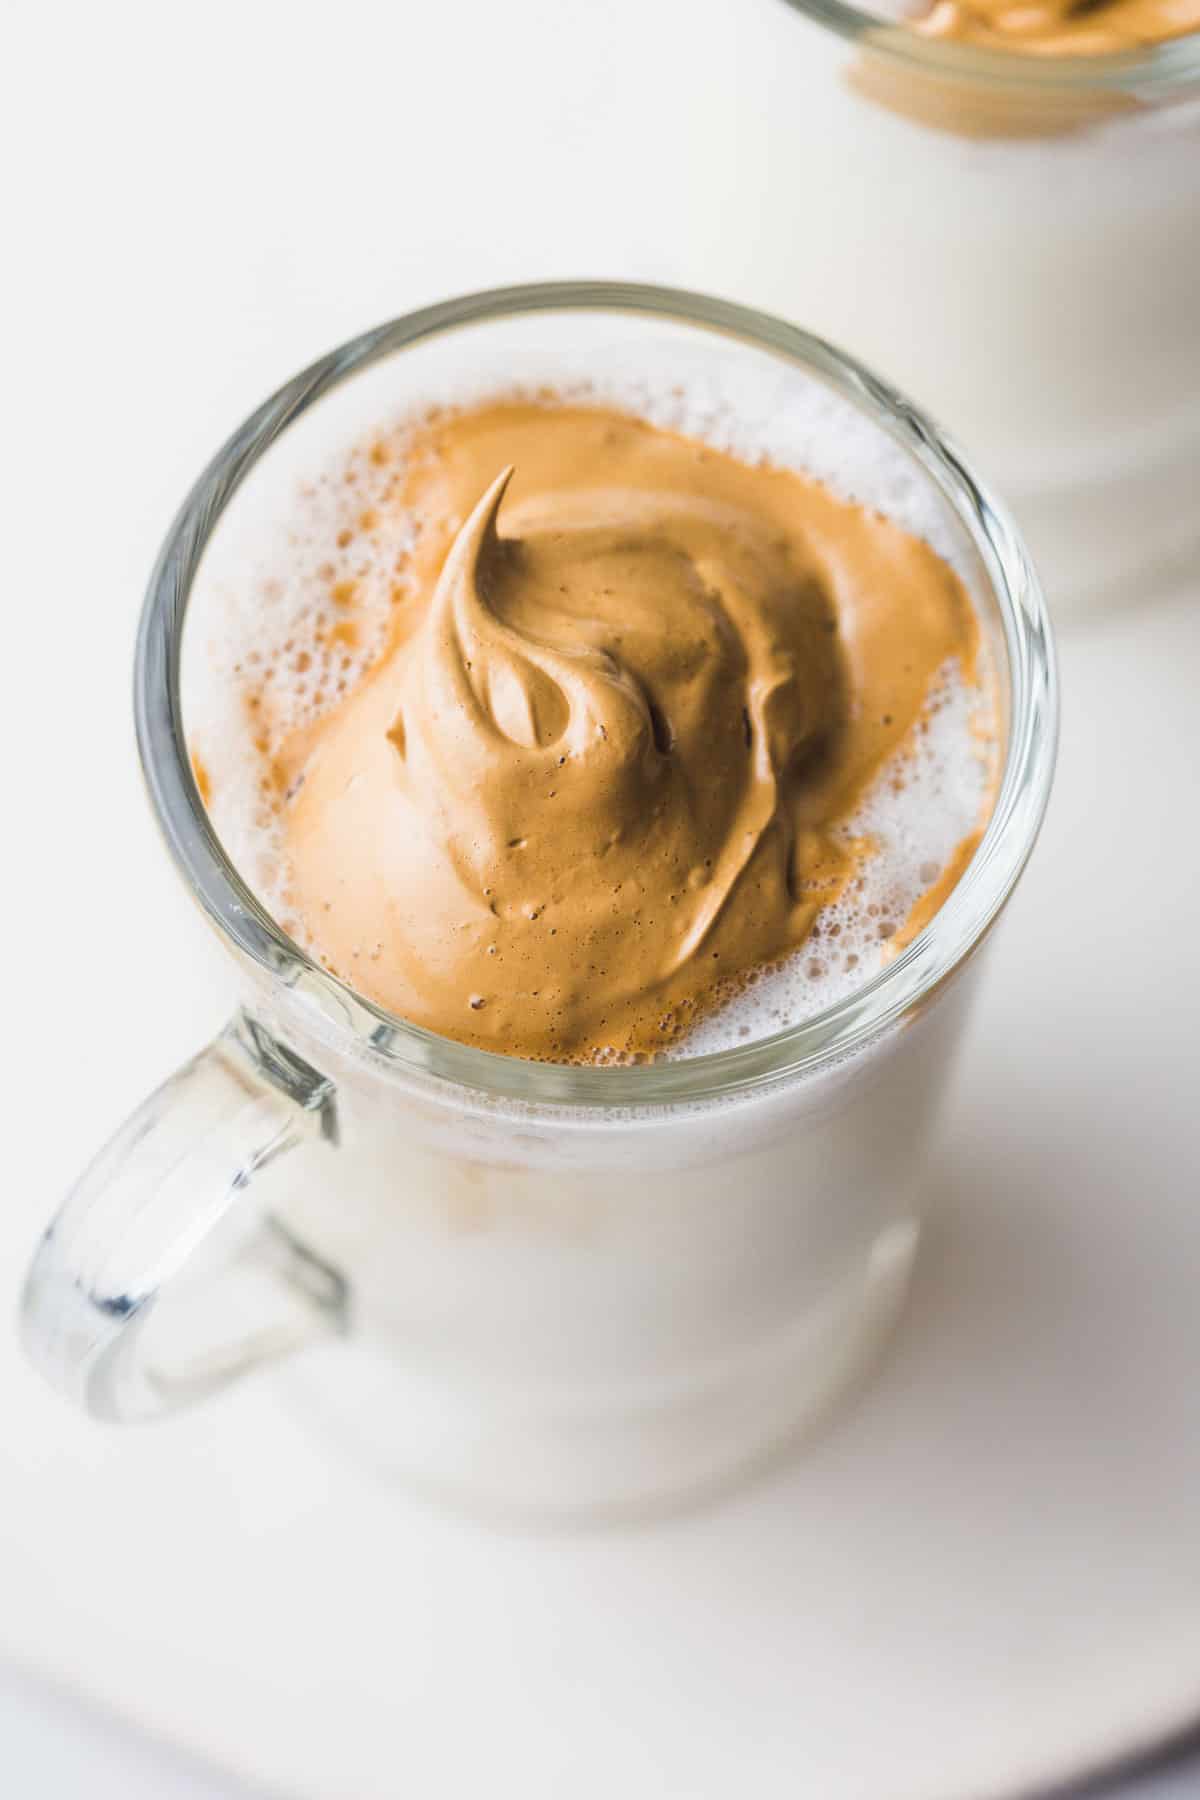 Whipped cream in a glass mug with warm vegan milk